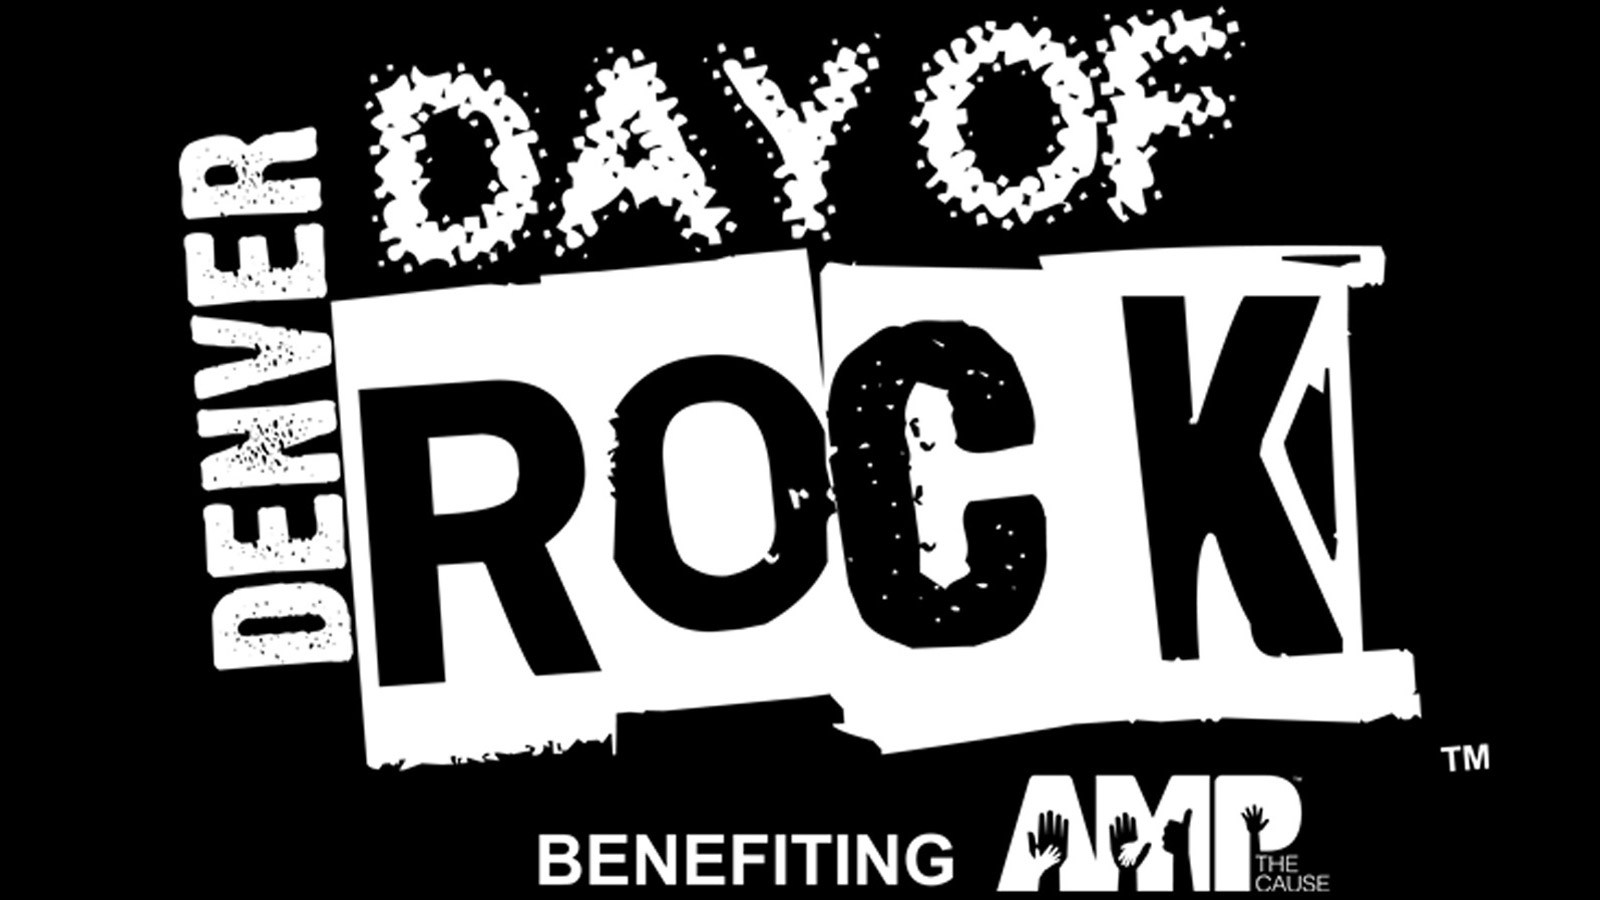 Denver Day Of Rock Benefits Health & Education Of Kids CBS Colorado